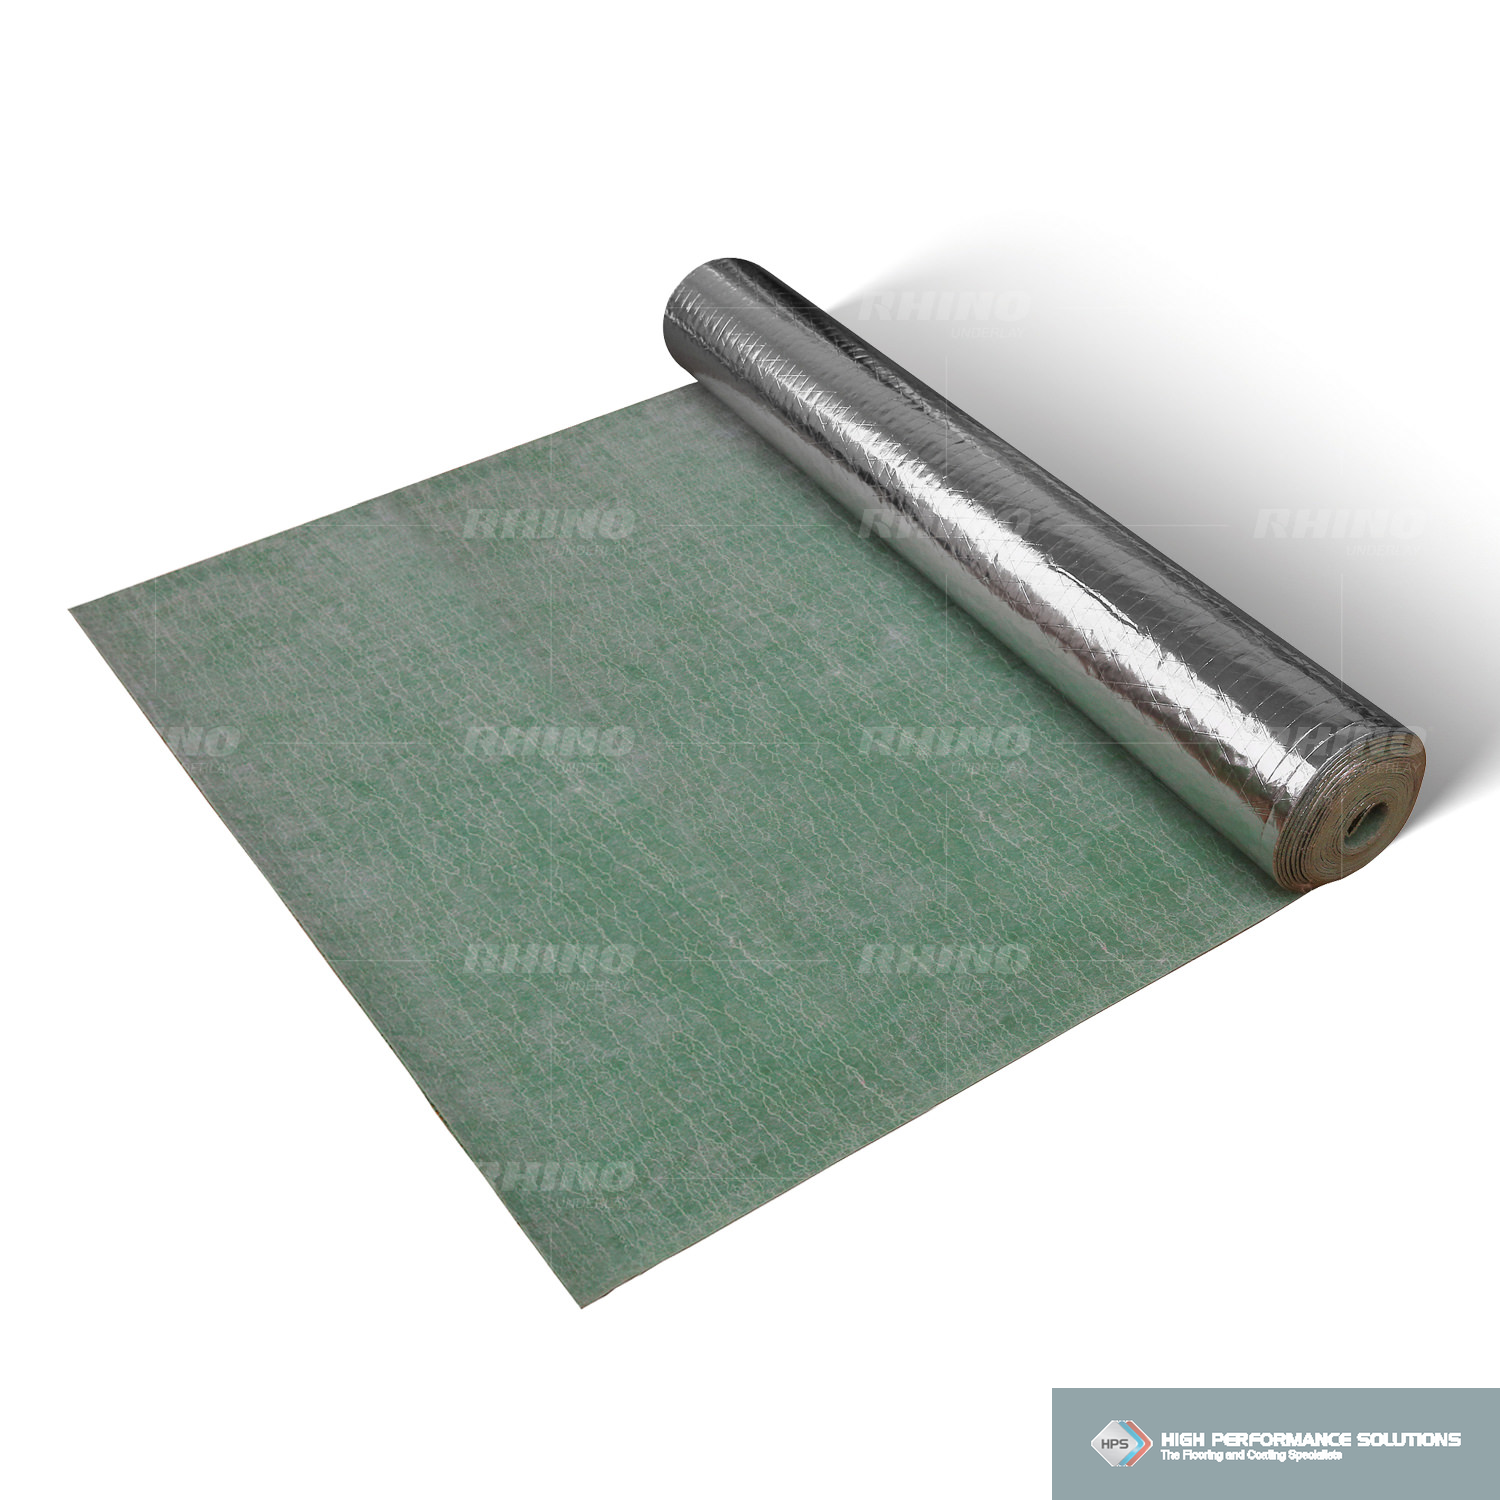 Raised Flooring Philippines - SolidFeel Rubber